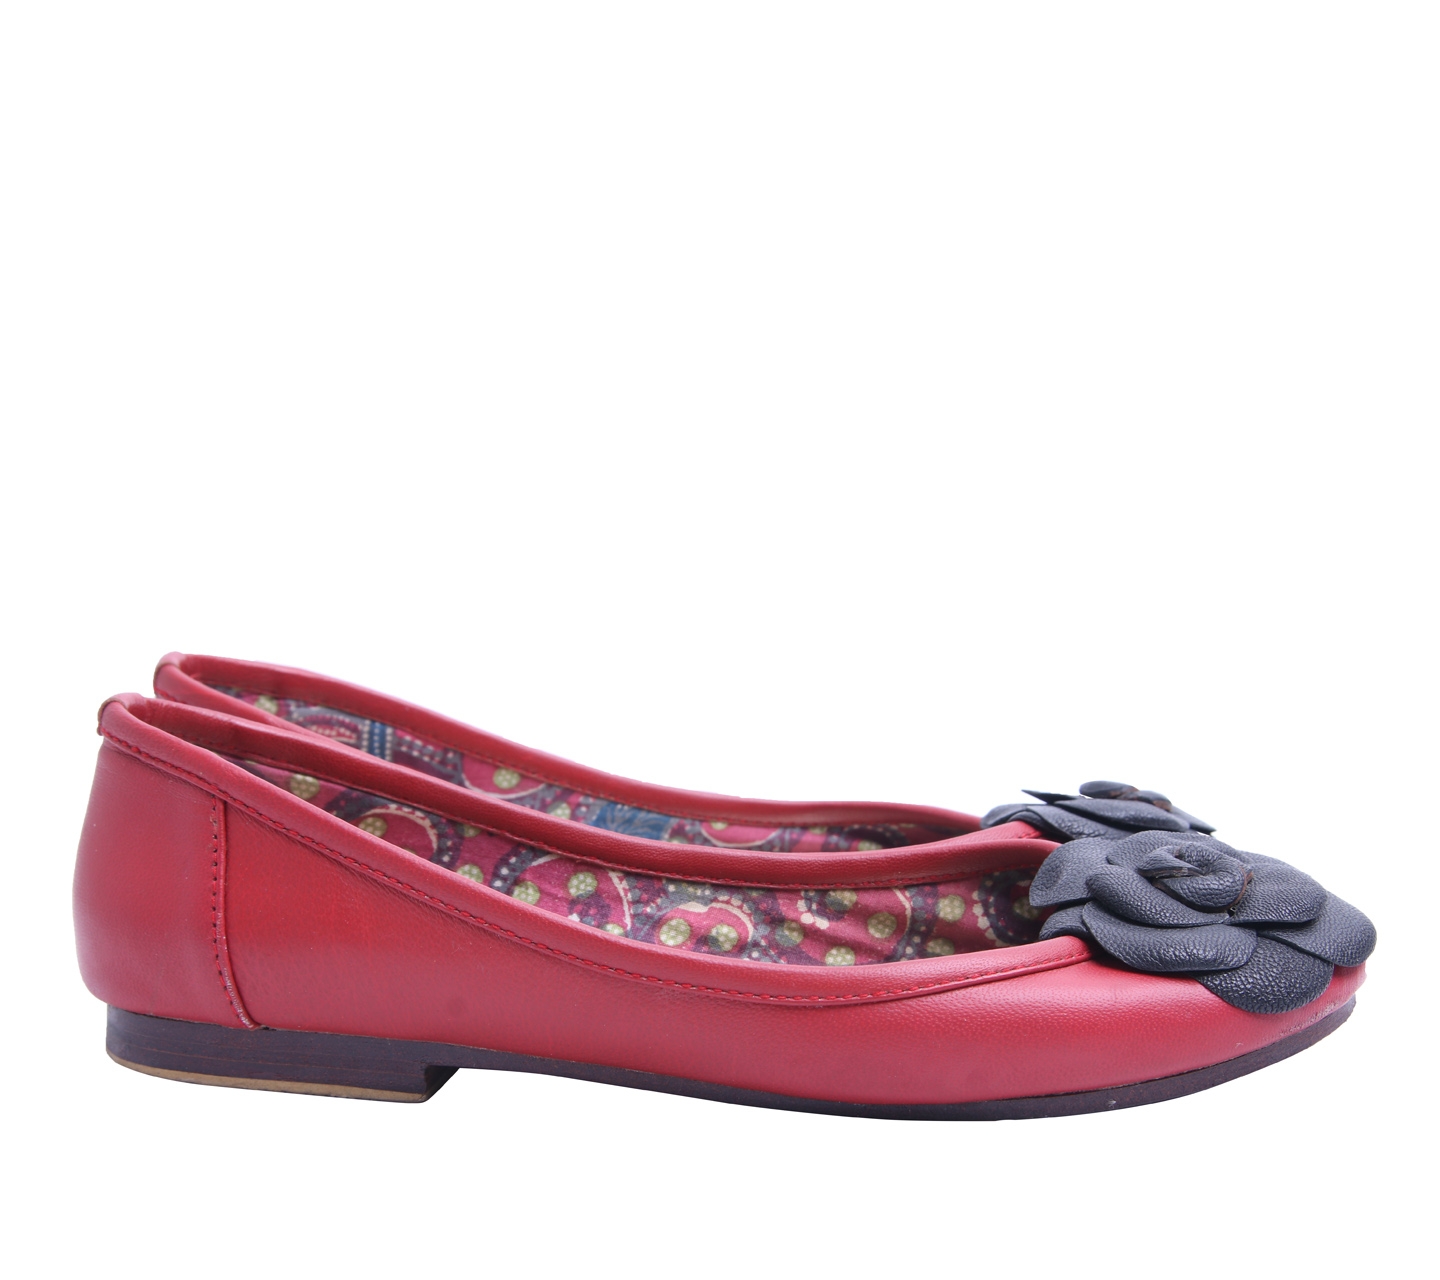 P.L.A Red Floral Flats Shoes